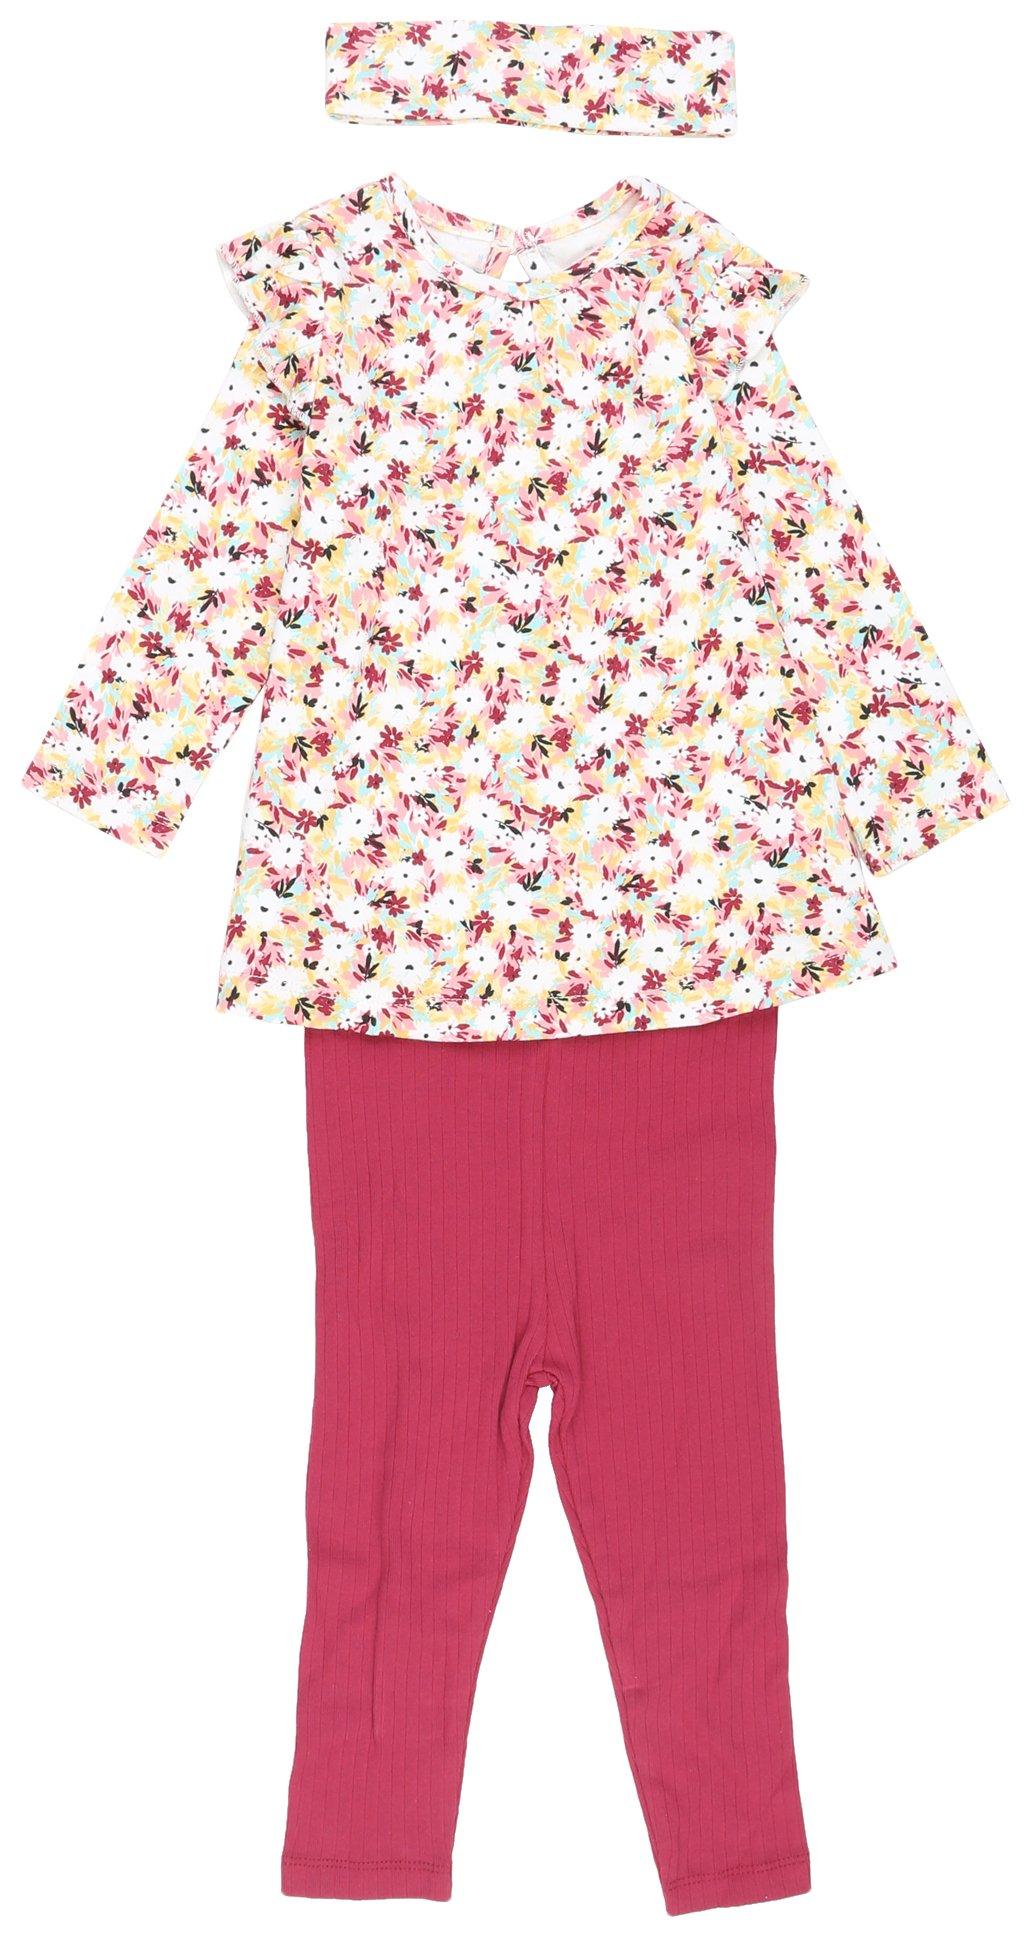 Baby Girls 3 Pc. Bushy Floral Ribbed Pant Set